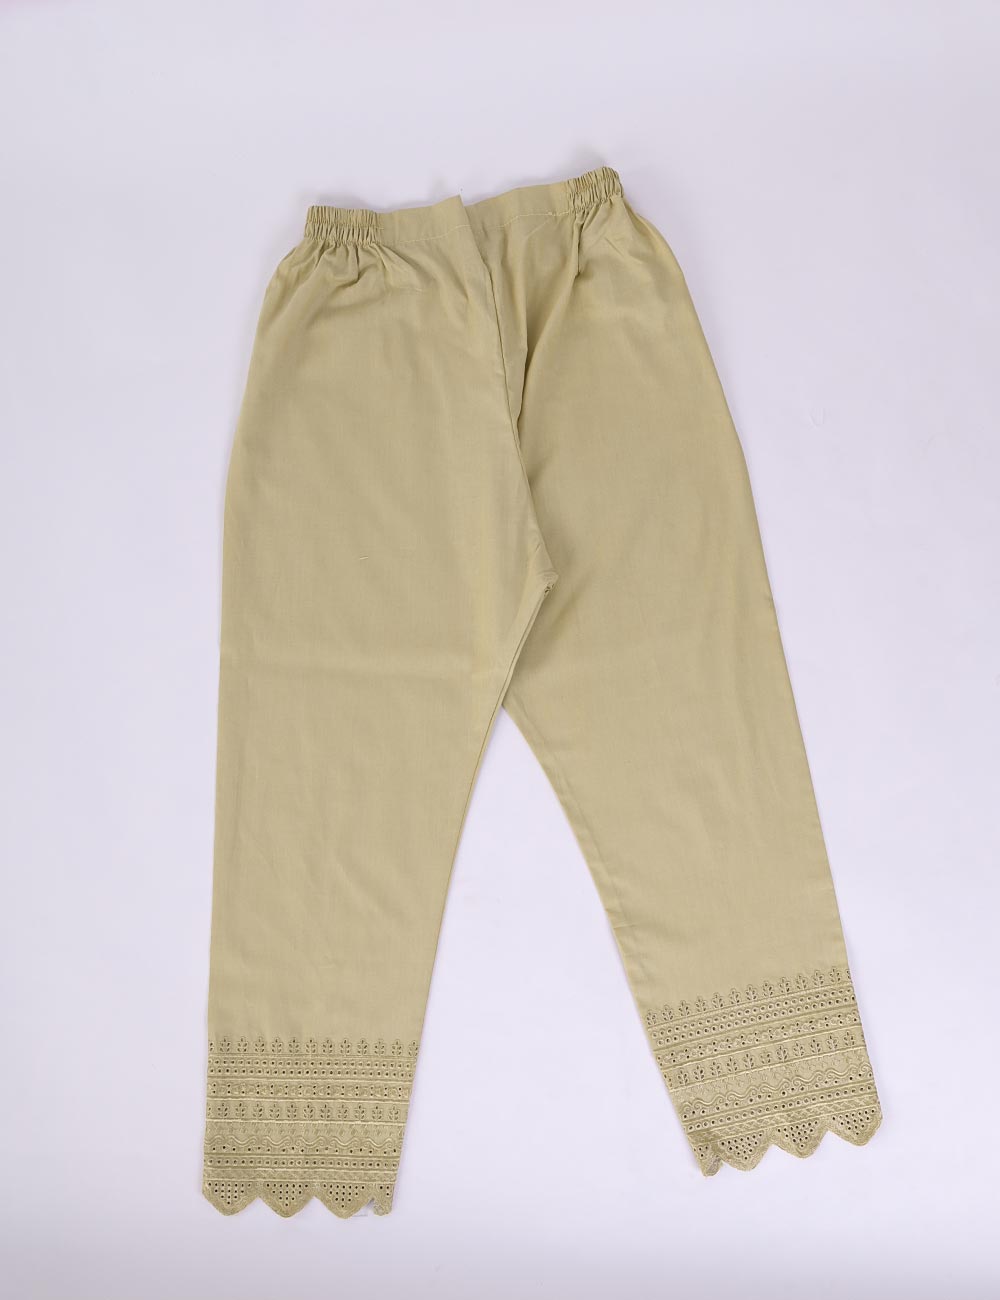 PTPC-04A-Skin - Premium Polyester Cotton Trouser